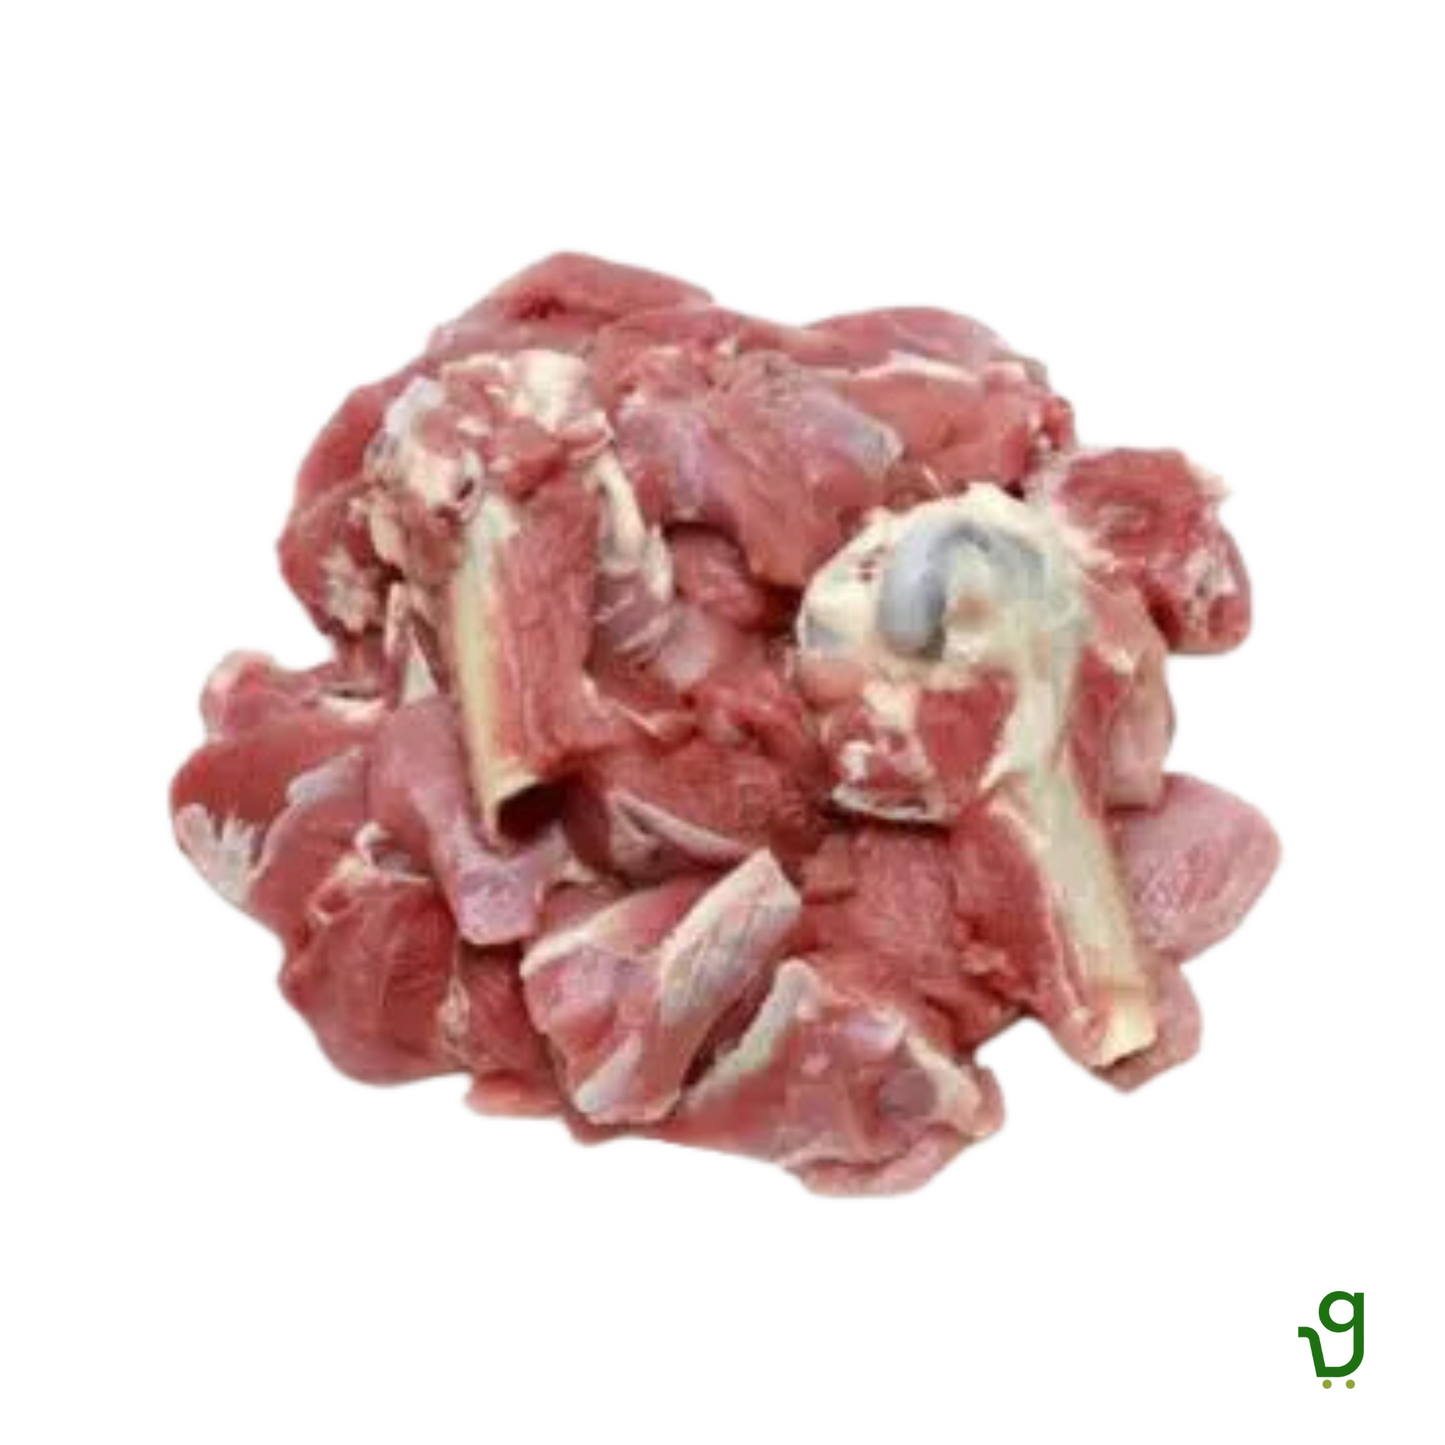 Mutton Shoulder Pieces (500g)